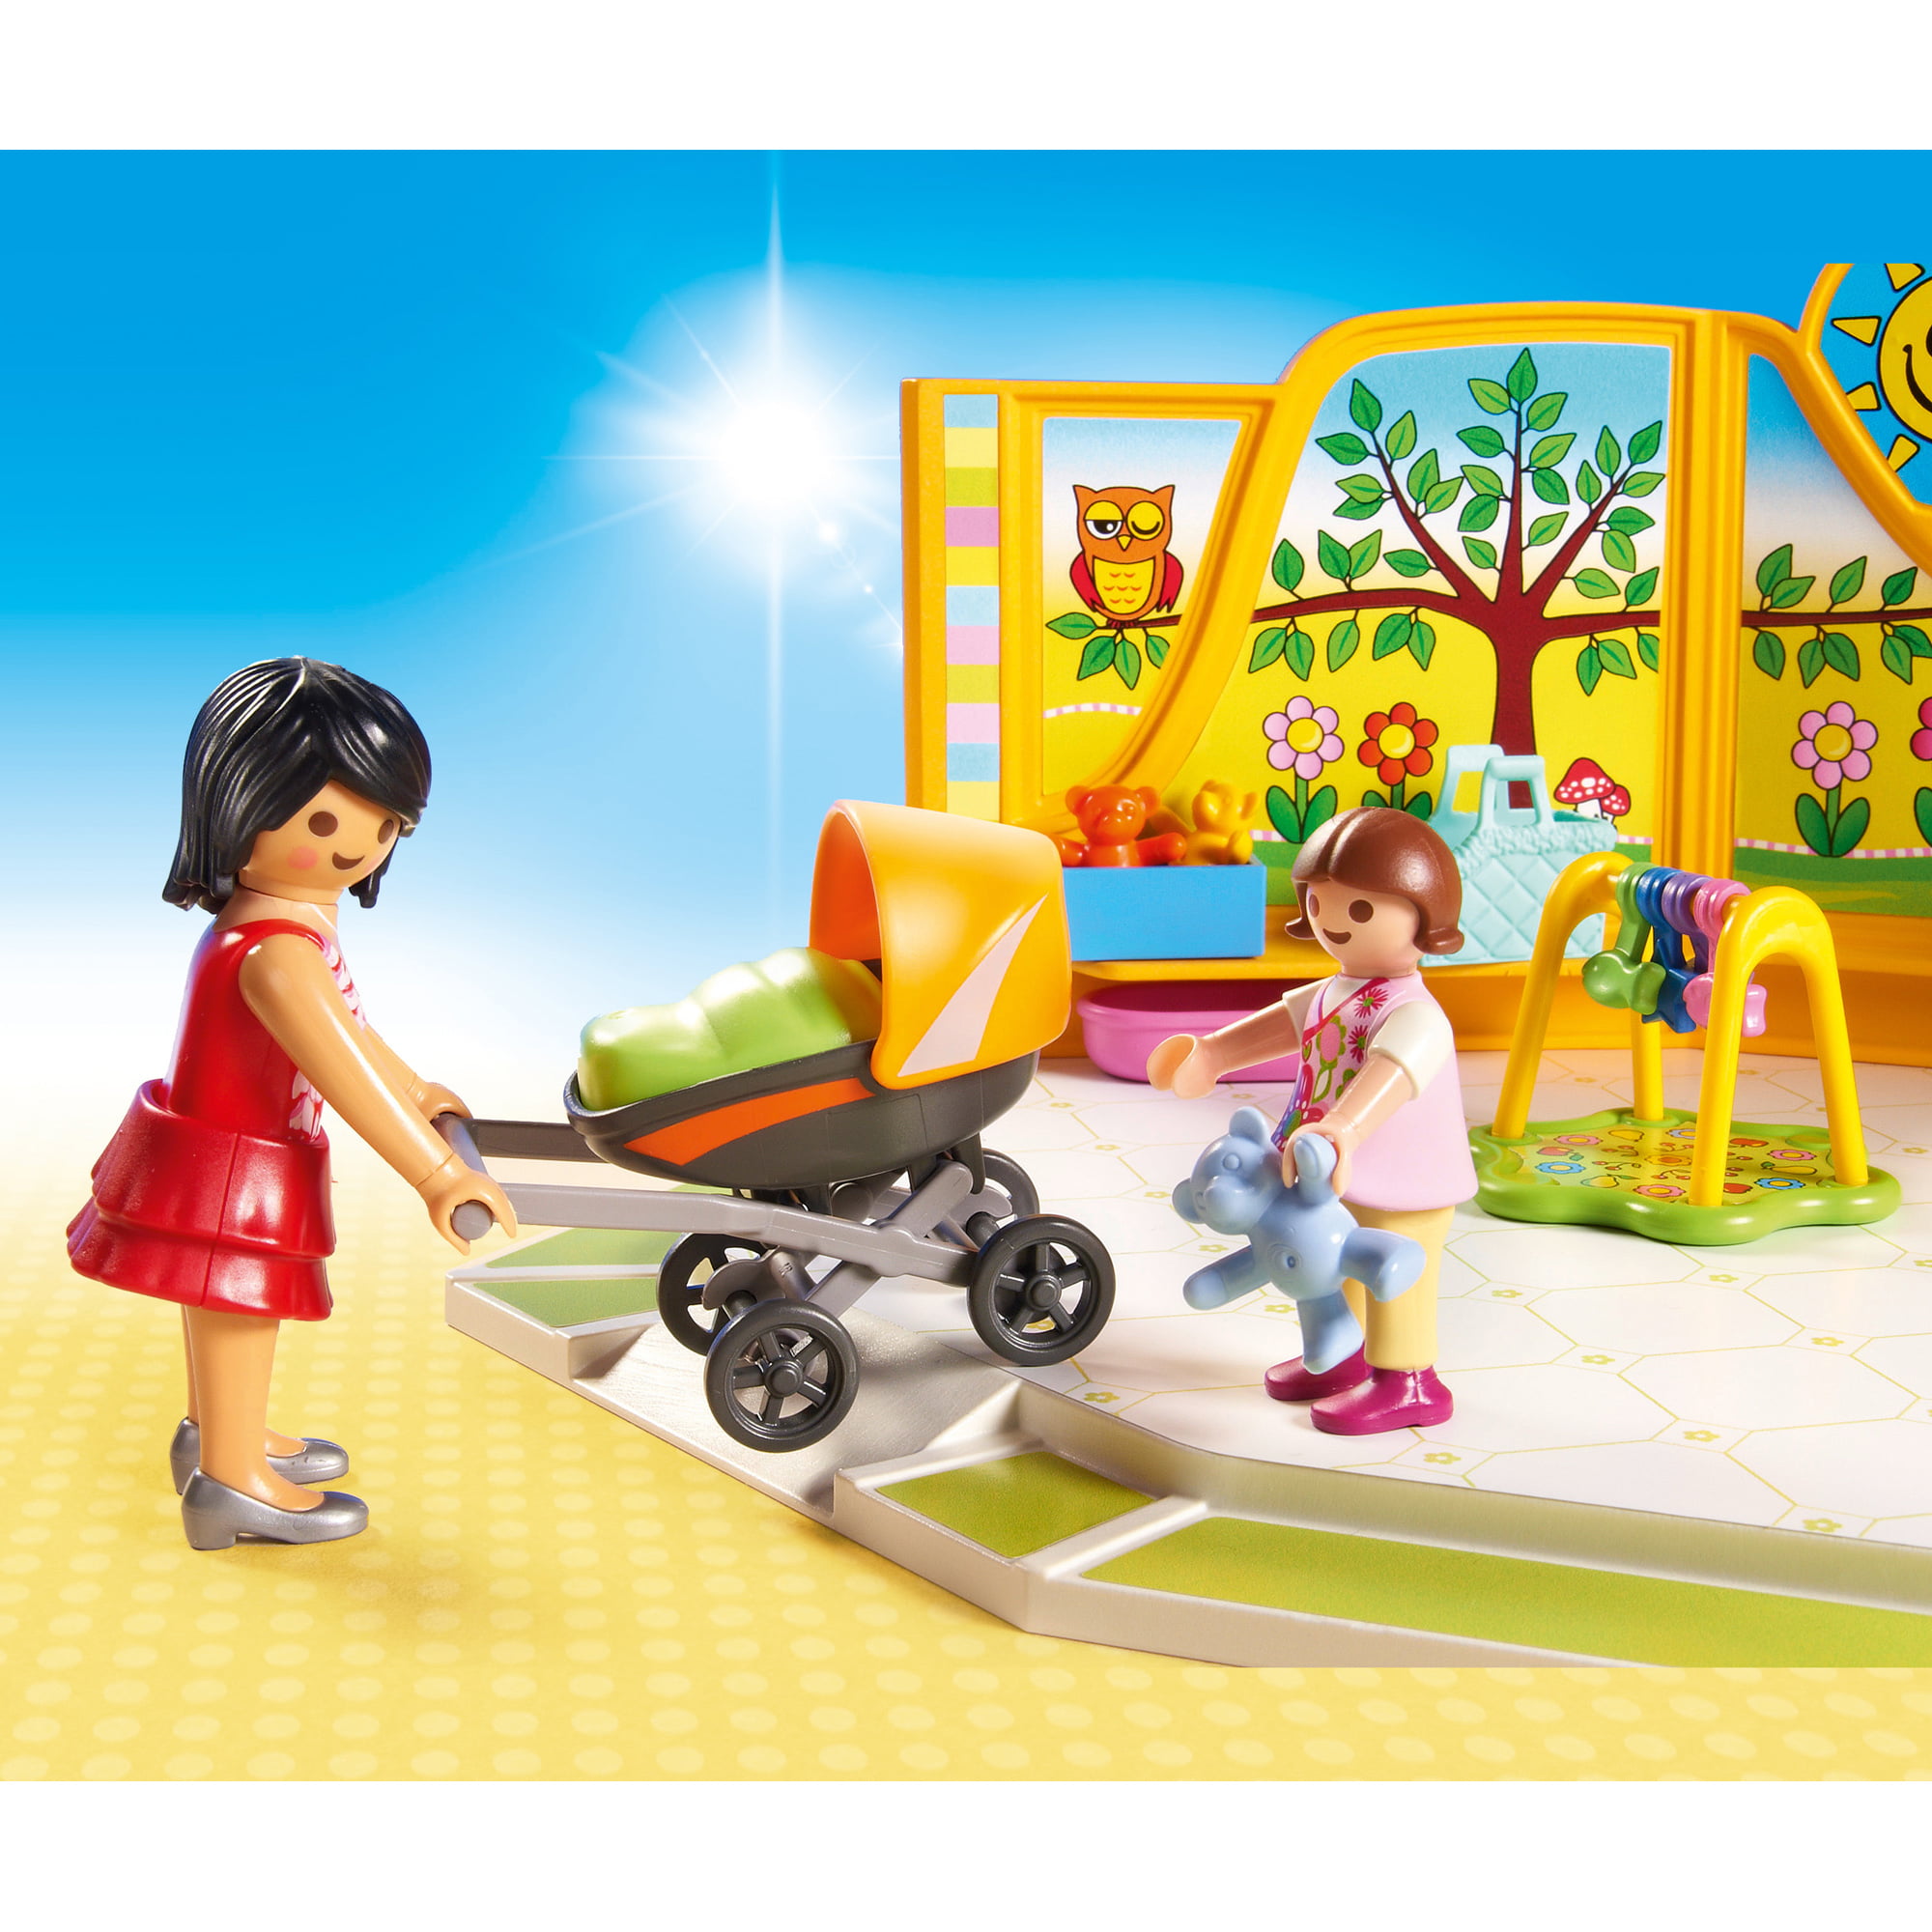 PLAYMOBIL Doll Playset - Walmart.com